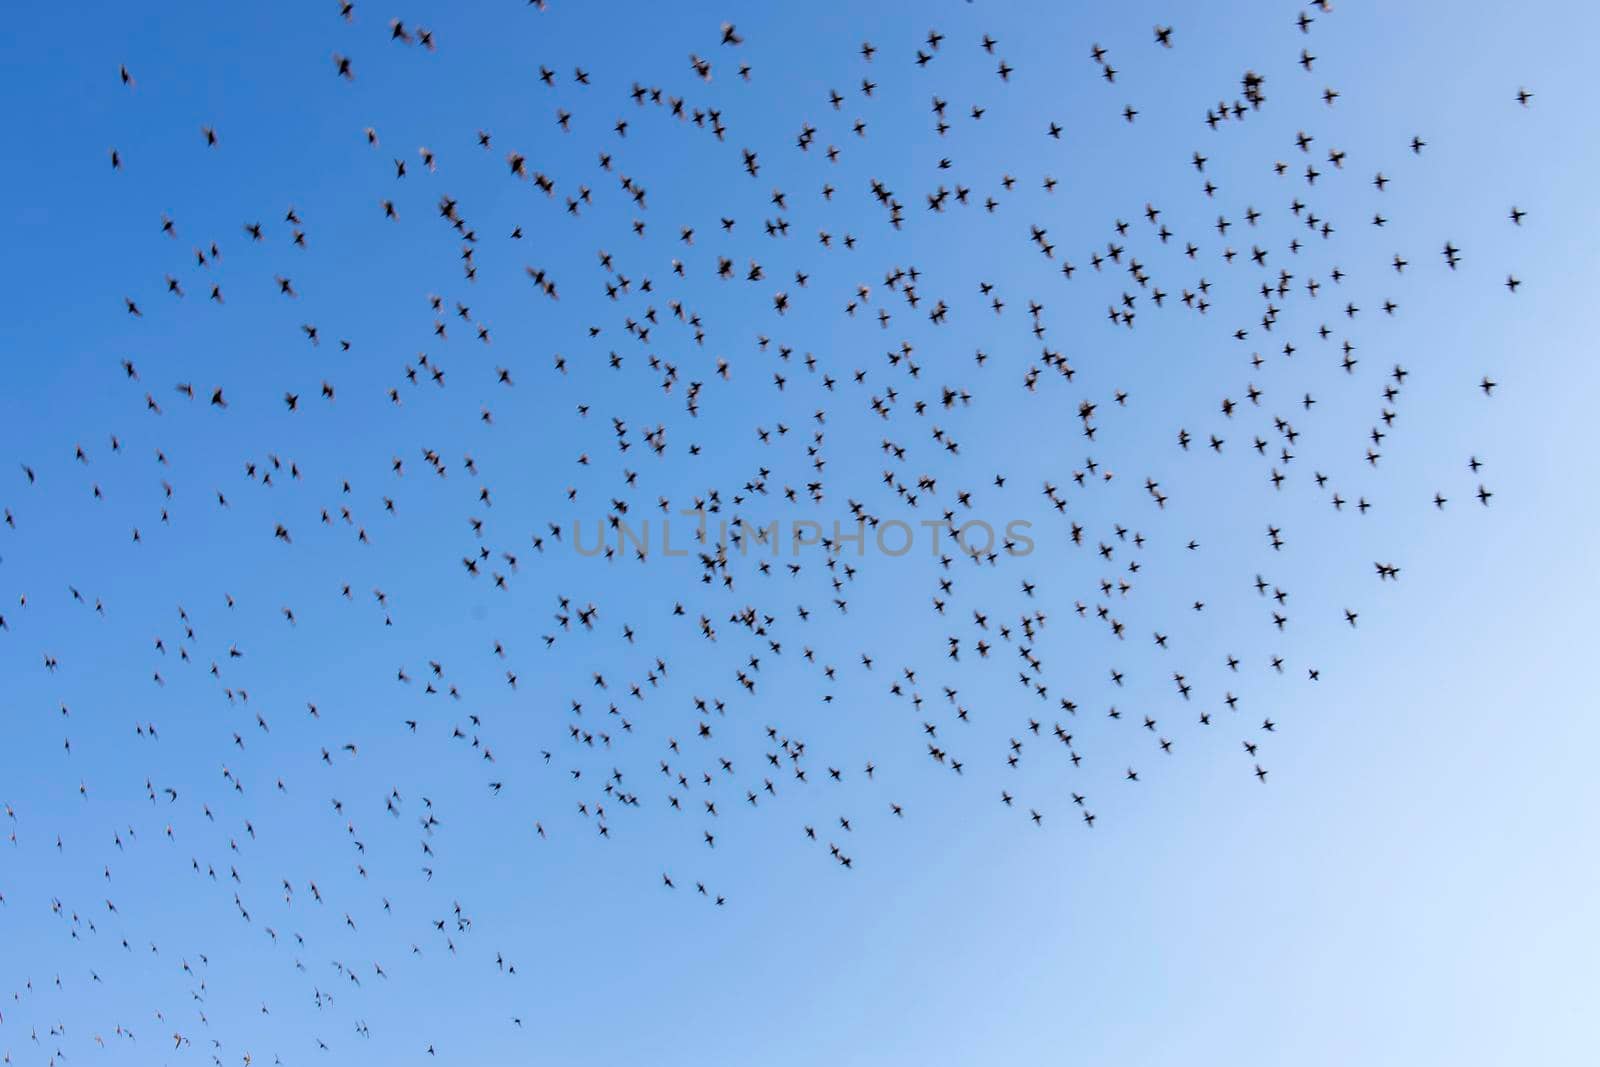 A flock of starlings in the sky by elenarostunova